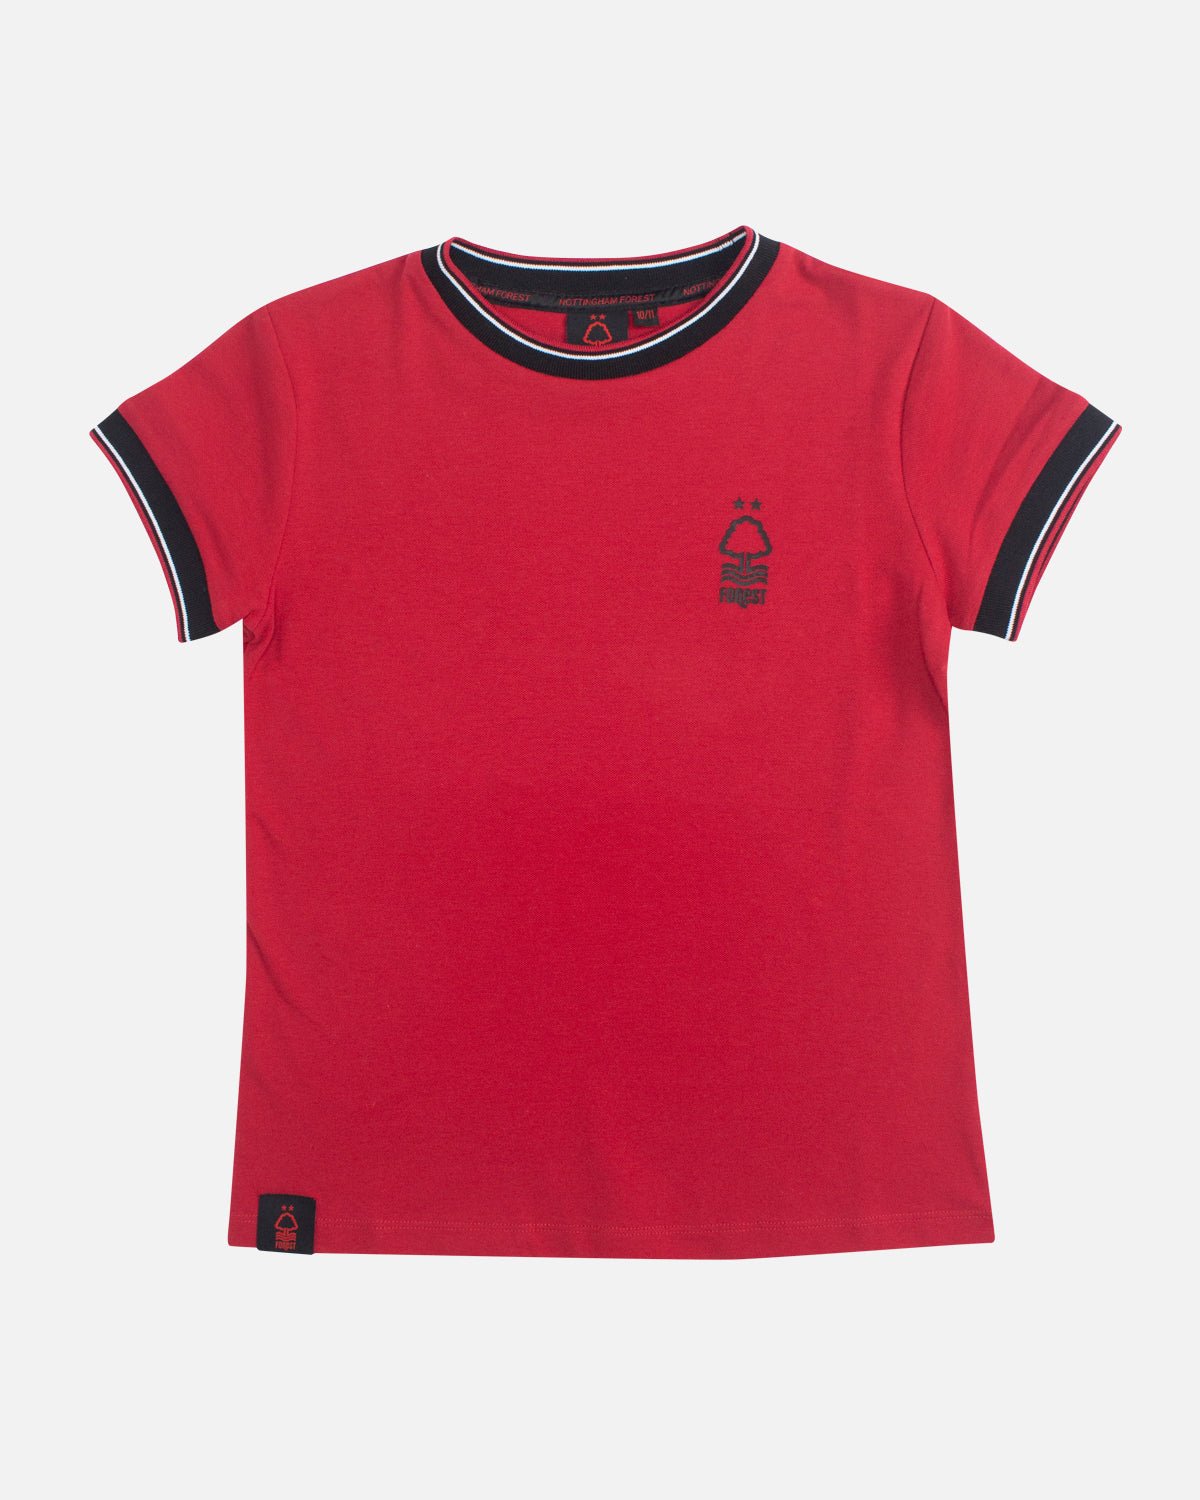 NFFC Girls Red Ringer T-Shirt - Nottingham Forest FC